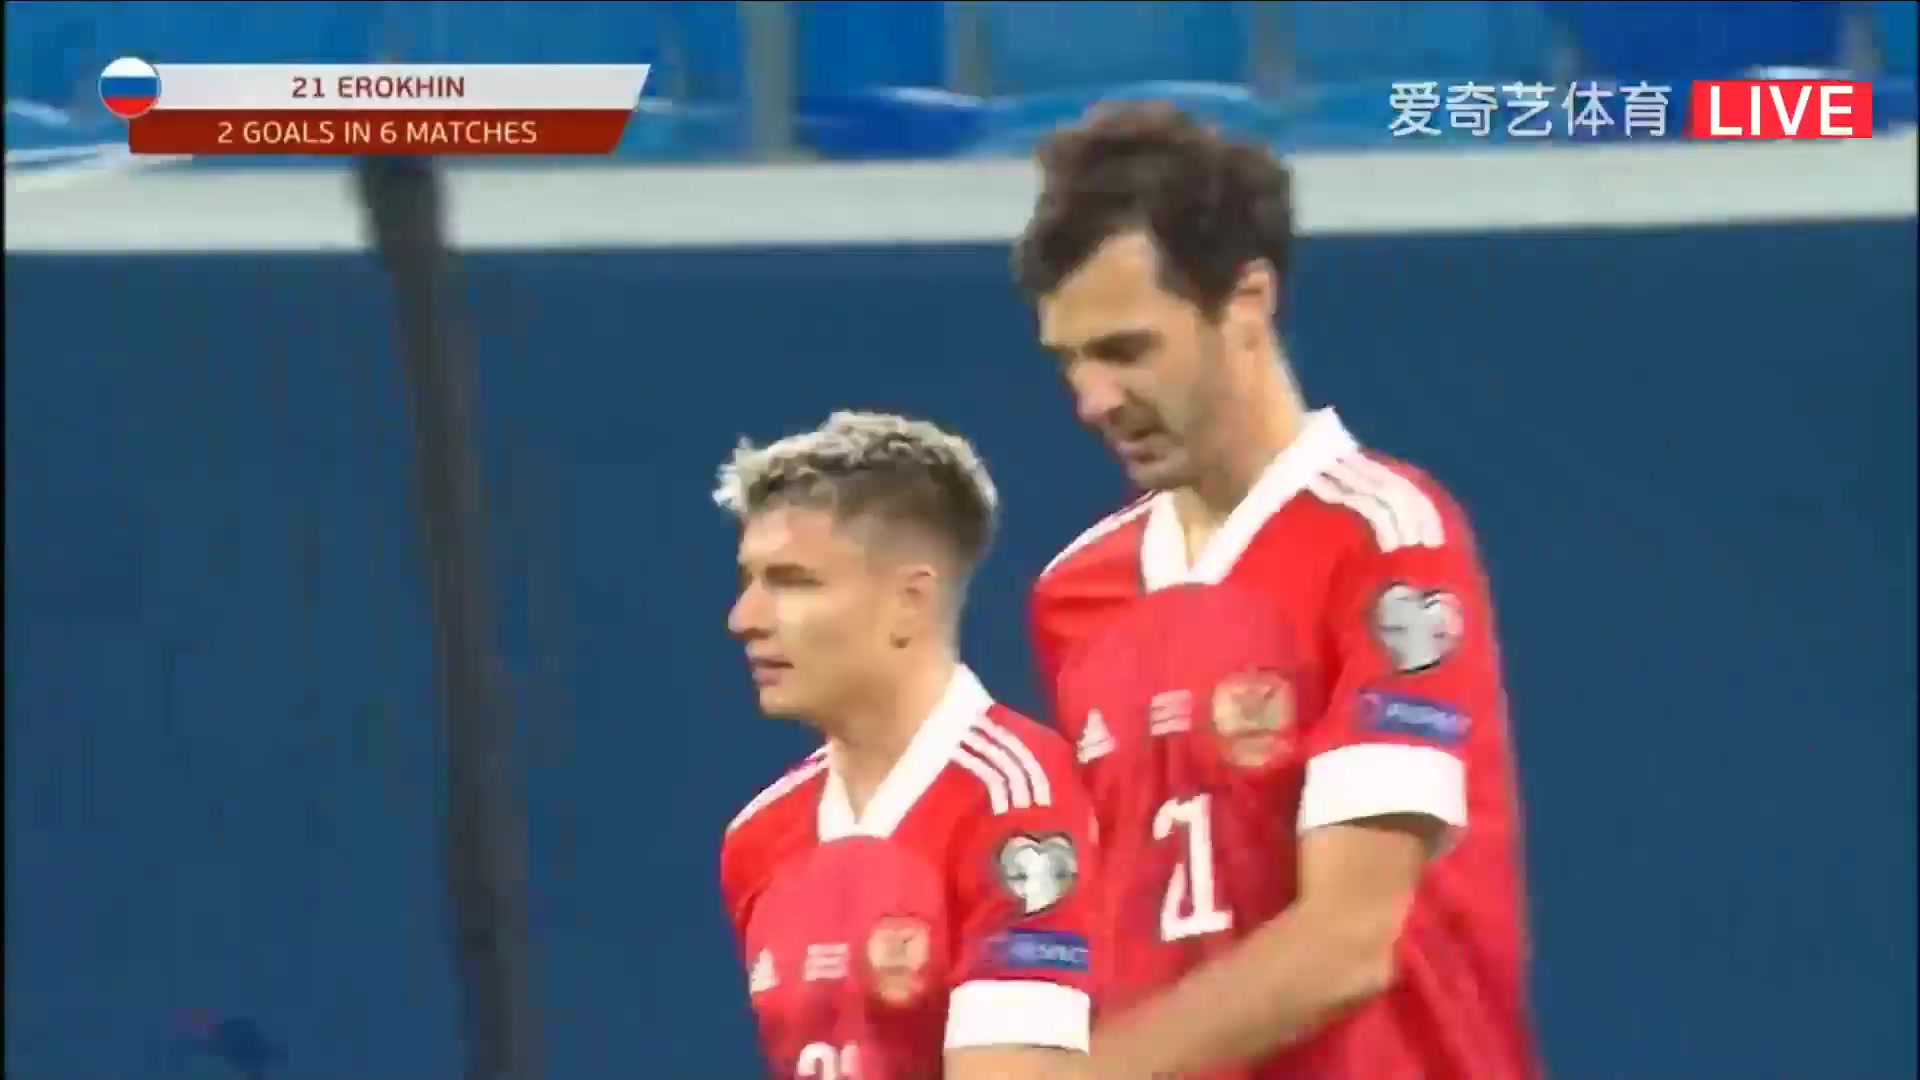 WCPEU Russia Vs Cyprus Aleksandr Erokhin Goal in 3 min, Score 1:0